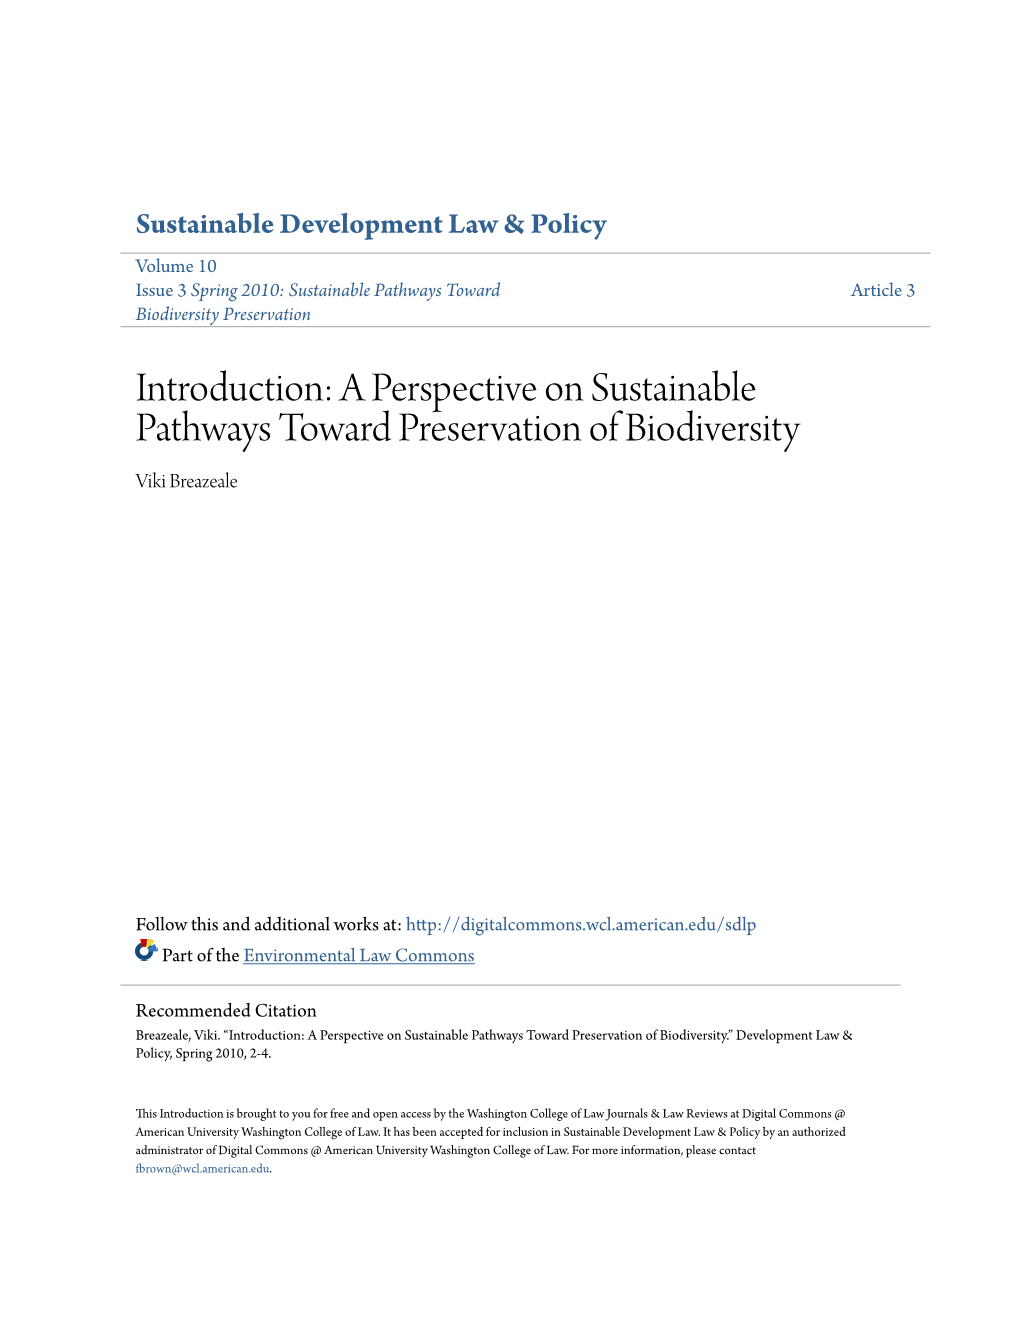 A Perspective on Sustainable Pathways Toward Preservation of Biodiversity Viki Breazeale